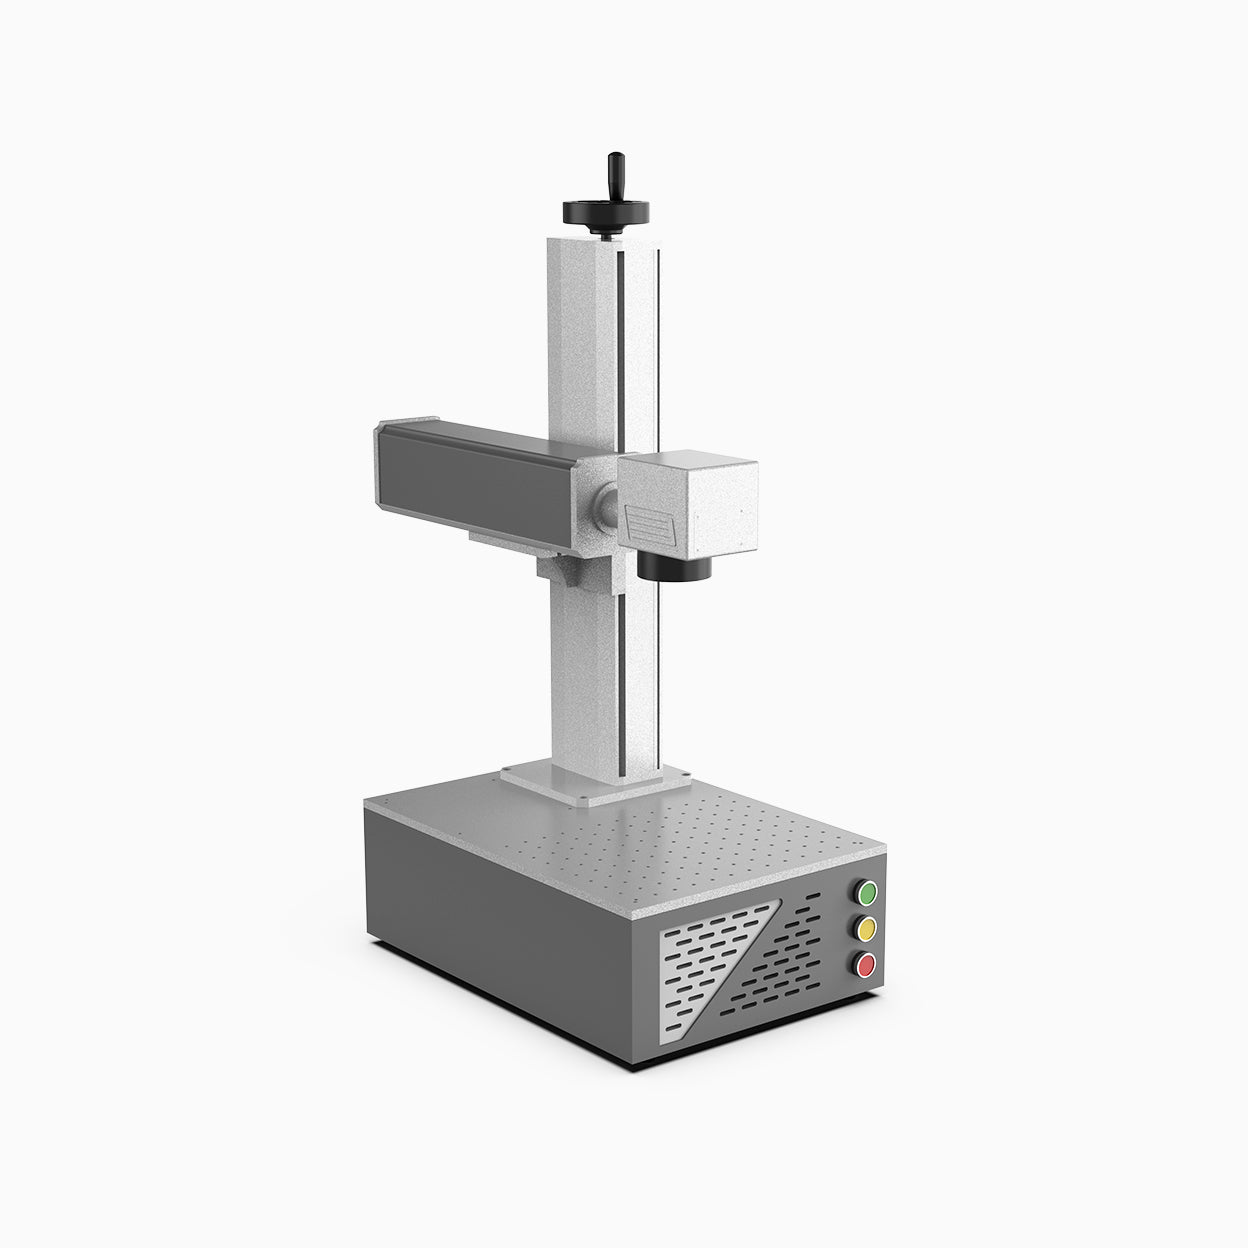 G6 MOPA 30W/60W/100W Fiber Laser Marking & Engraving Machine